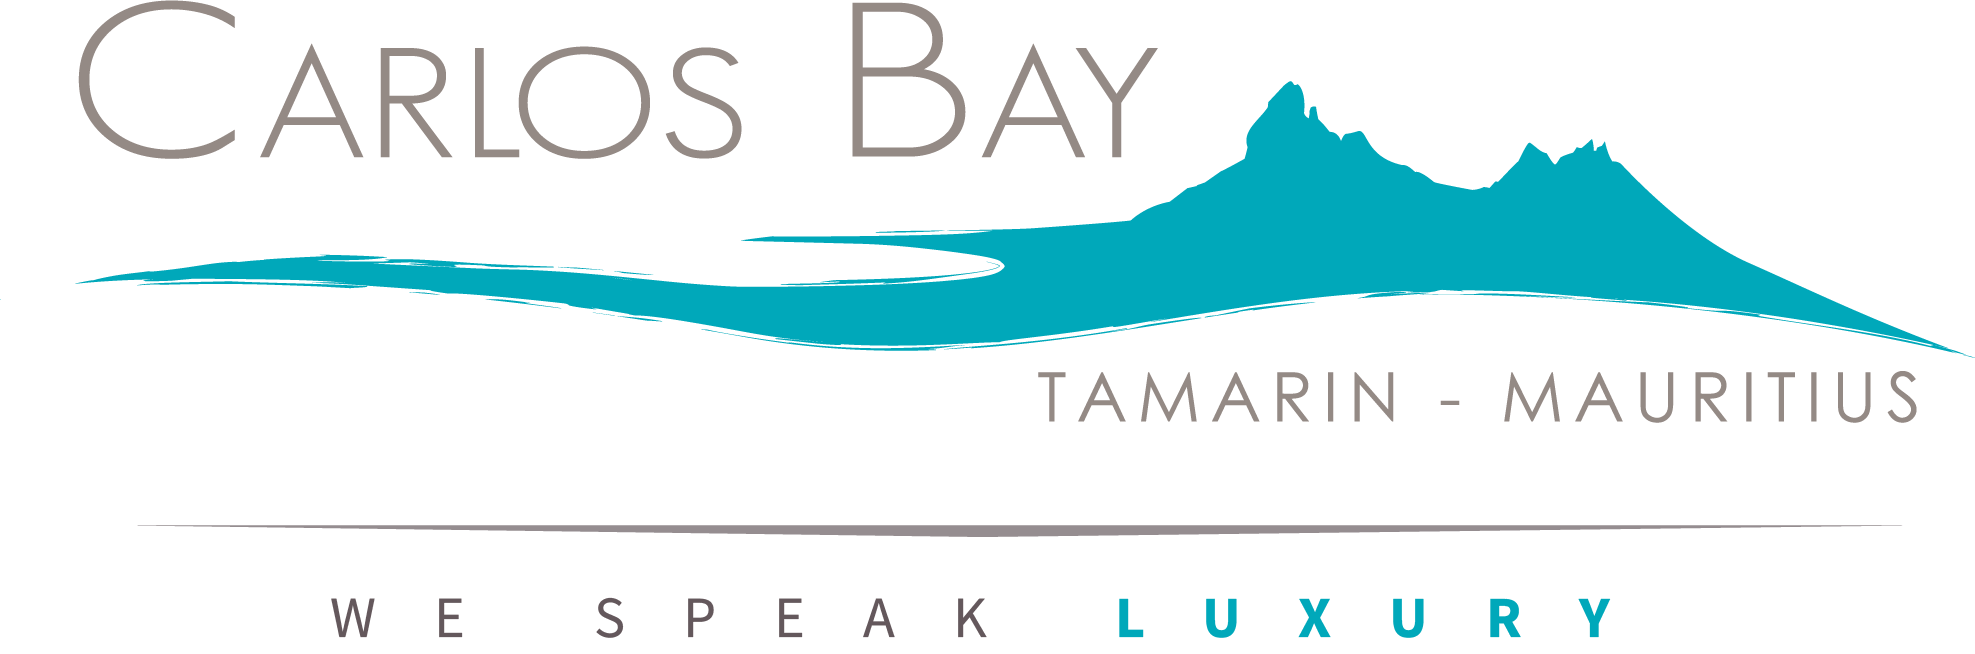 Carlos Bay logo